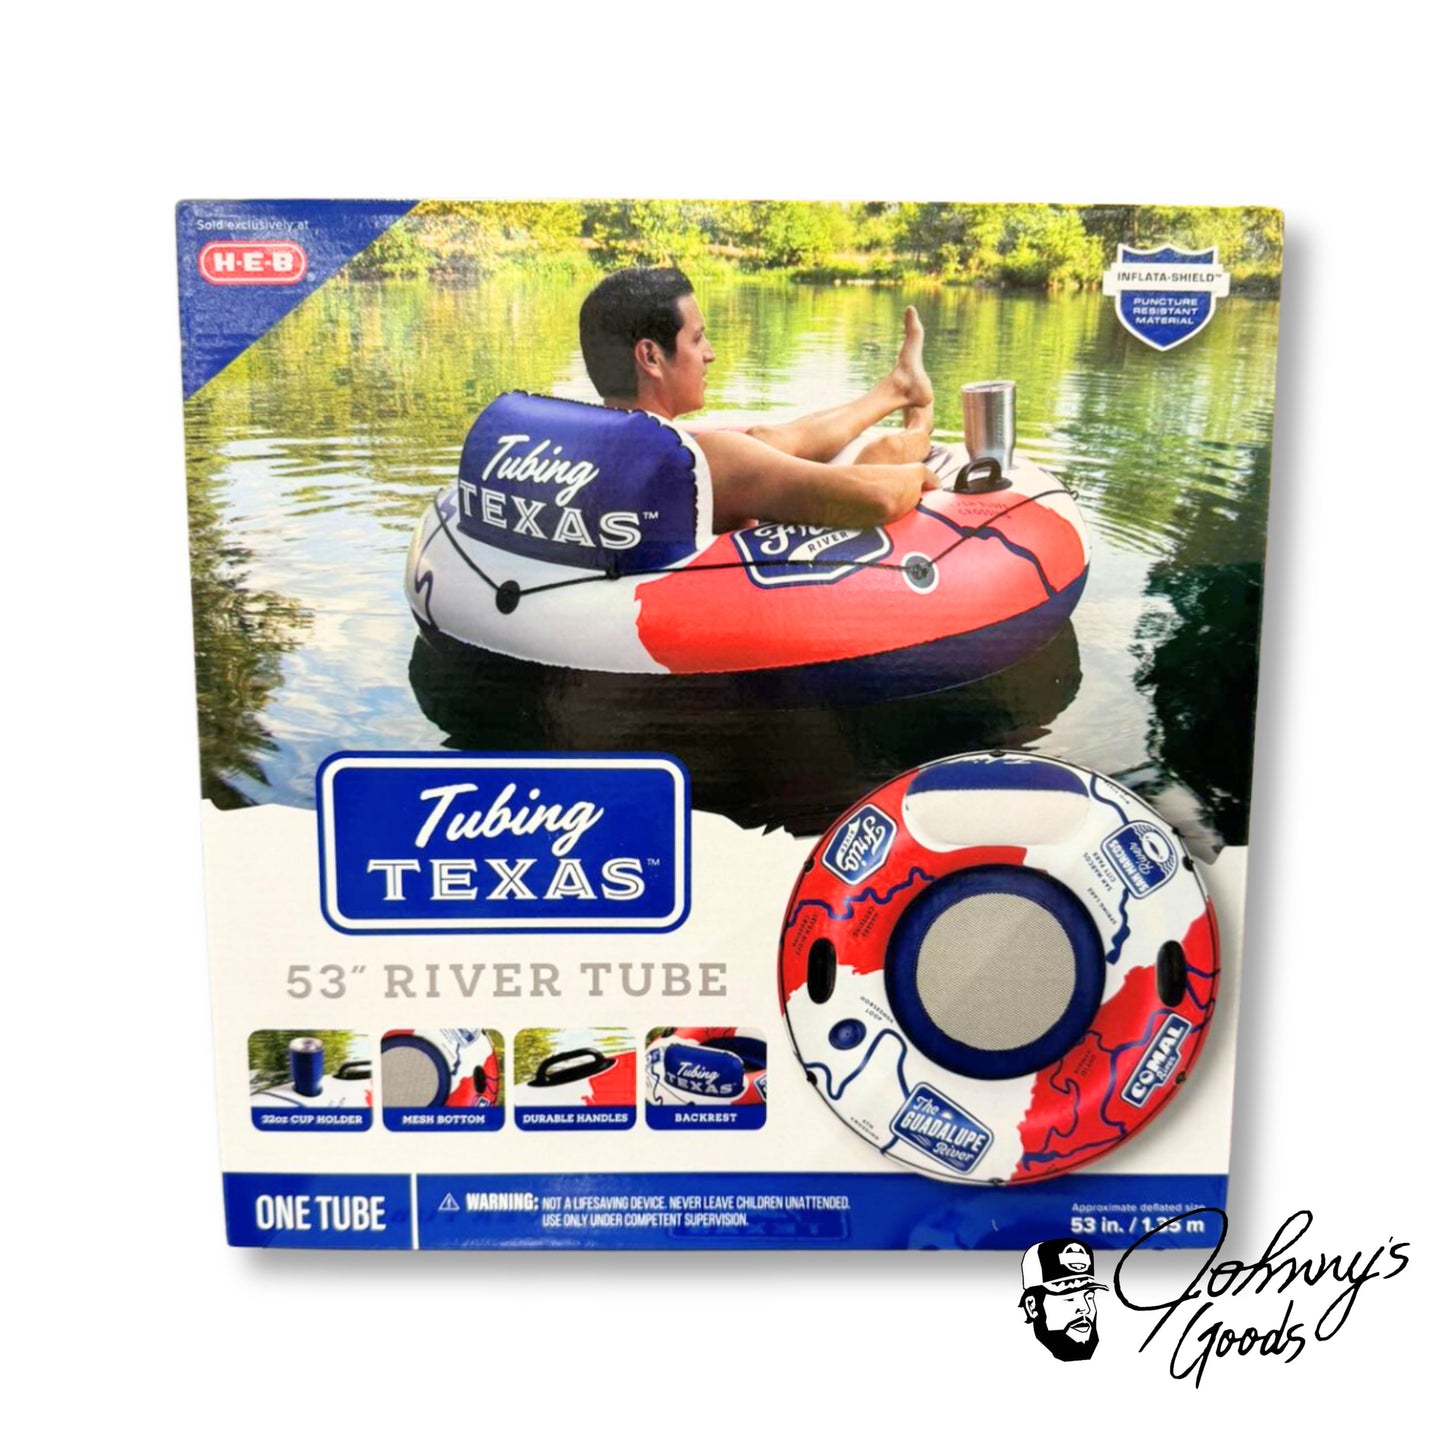 H‑E‑B Tubing Texas Inflatable River Tube pool summer